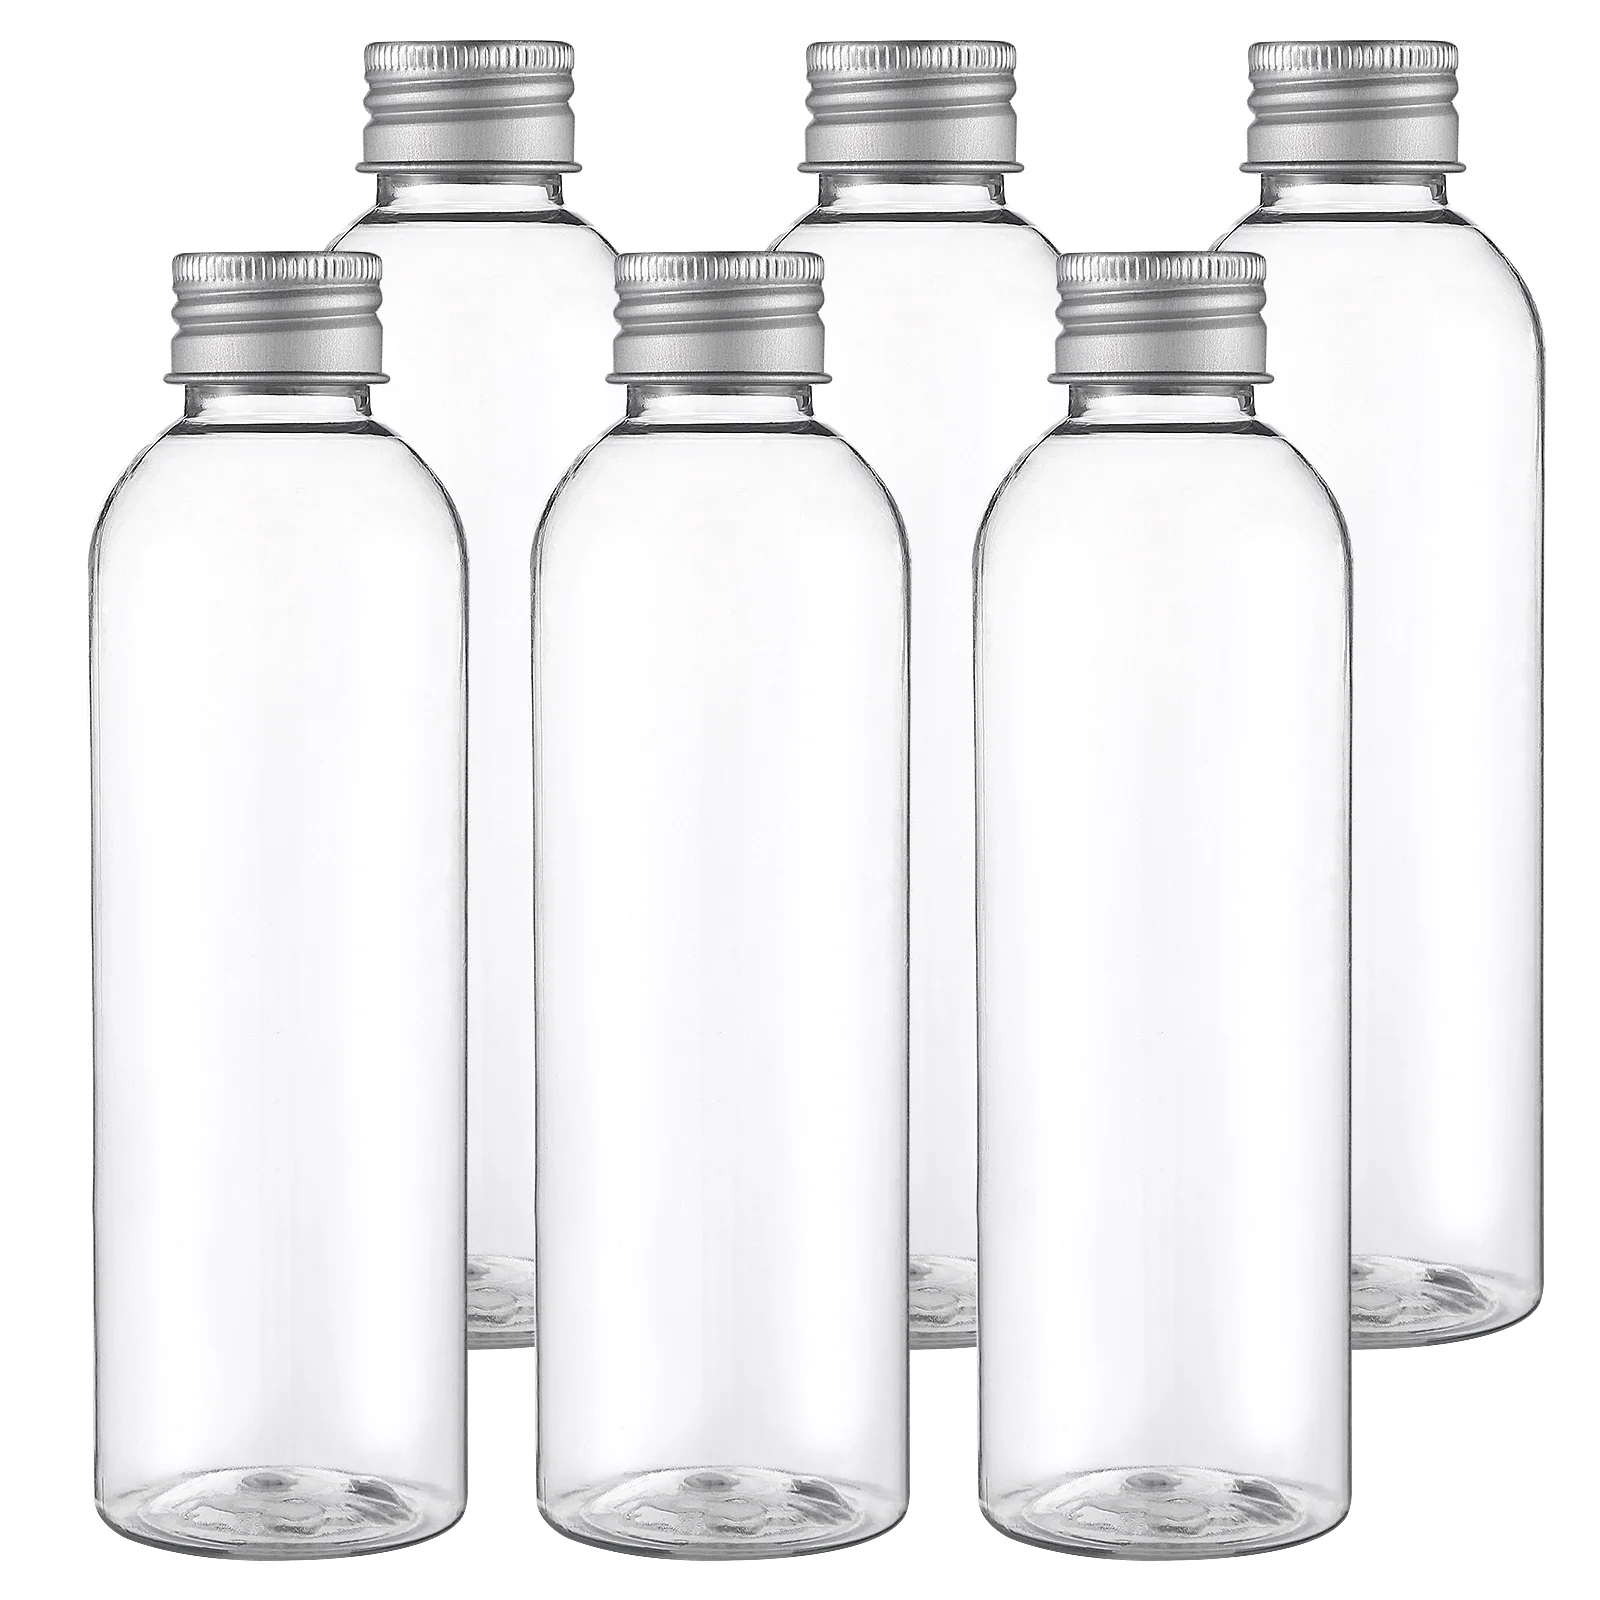 

6pcs Toiletries Plastic Bottles Conditioner Shampoo Bottles Empty Lotion Bottles Refillable Bottles (200ml) Squeeze